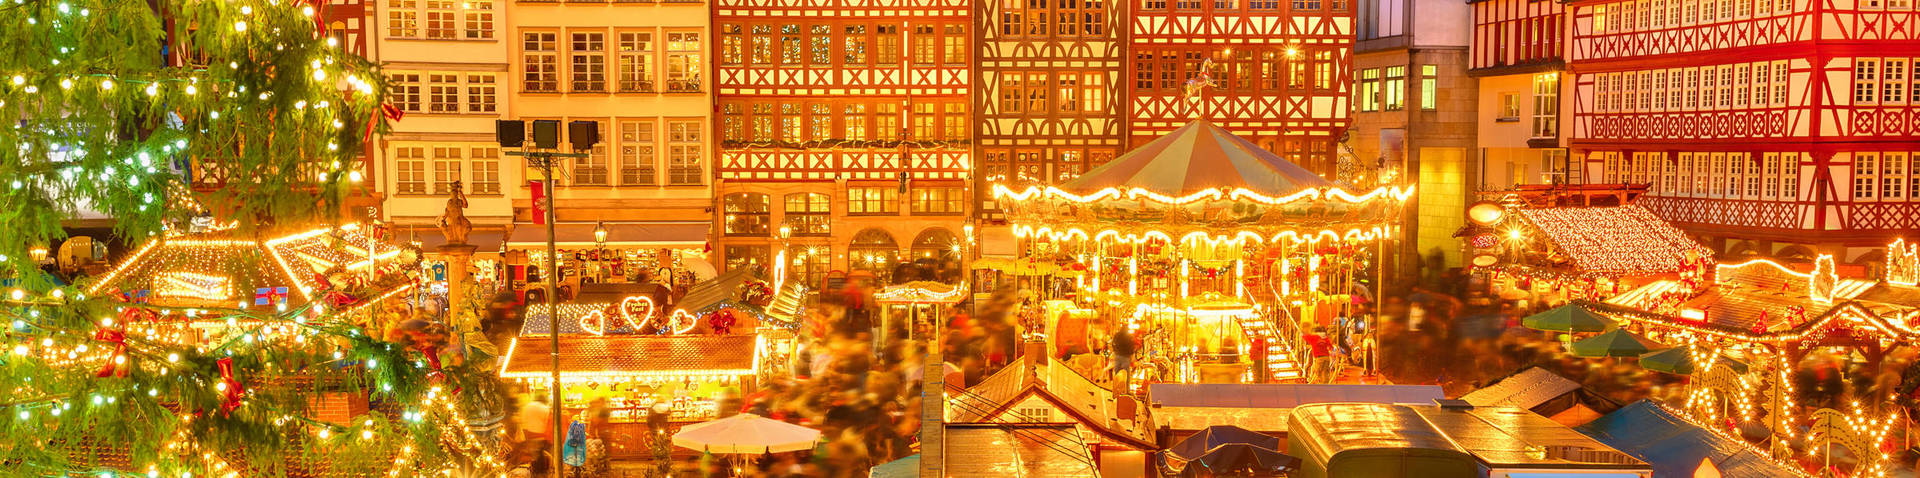 Weihnachtsshopping in Frankfurt am Main - H-Hotels.com - Offizielle Webseite